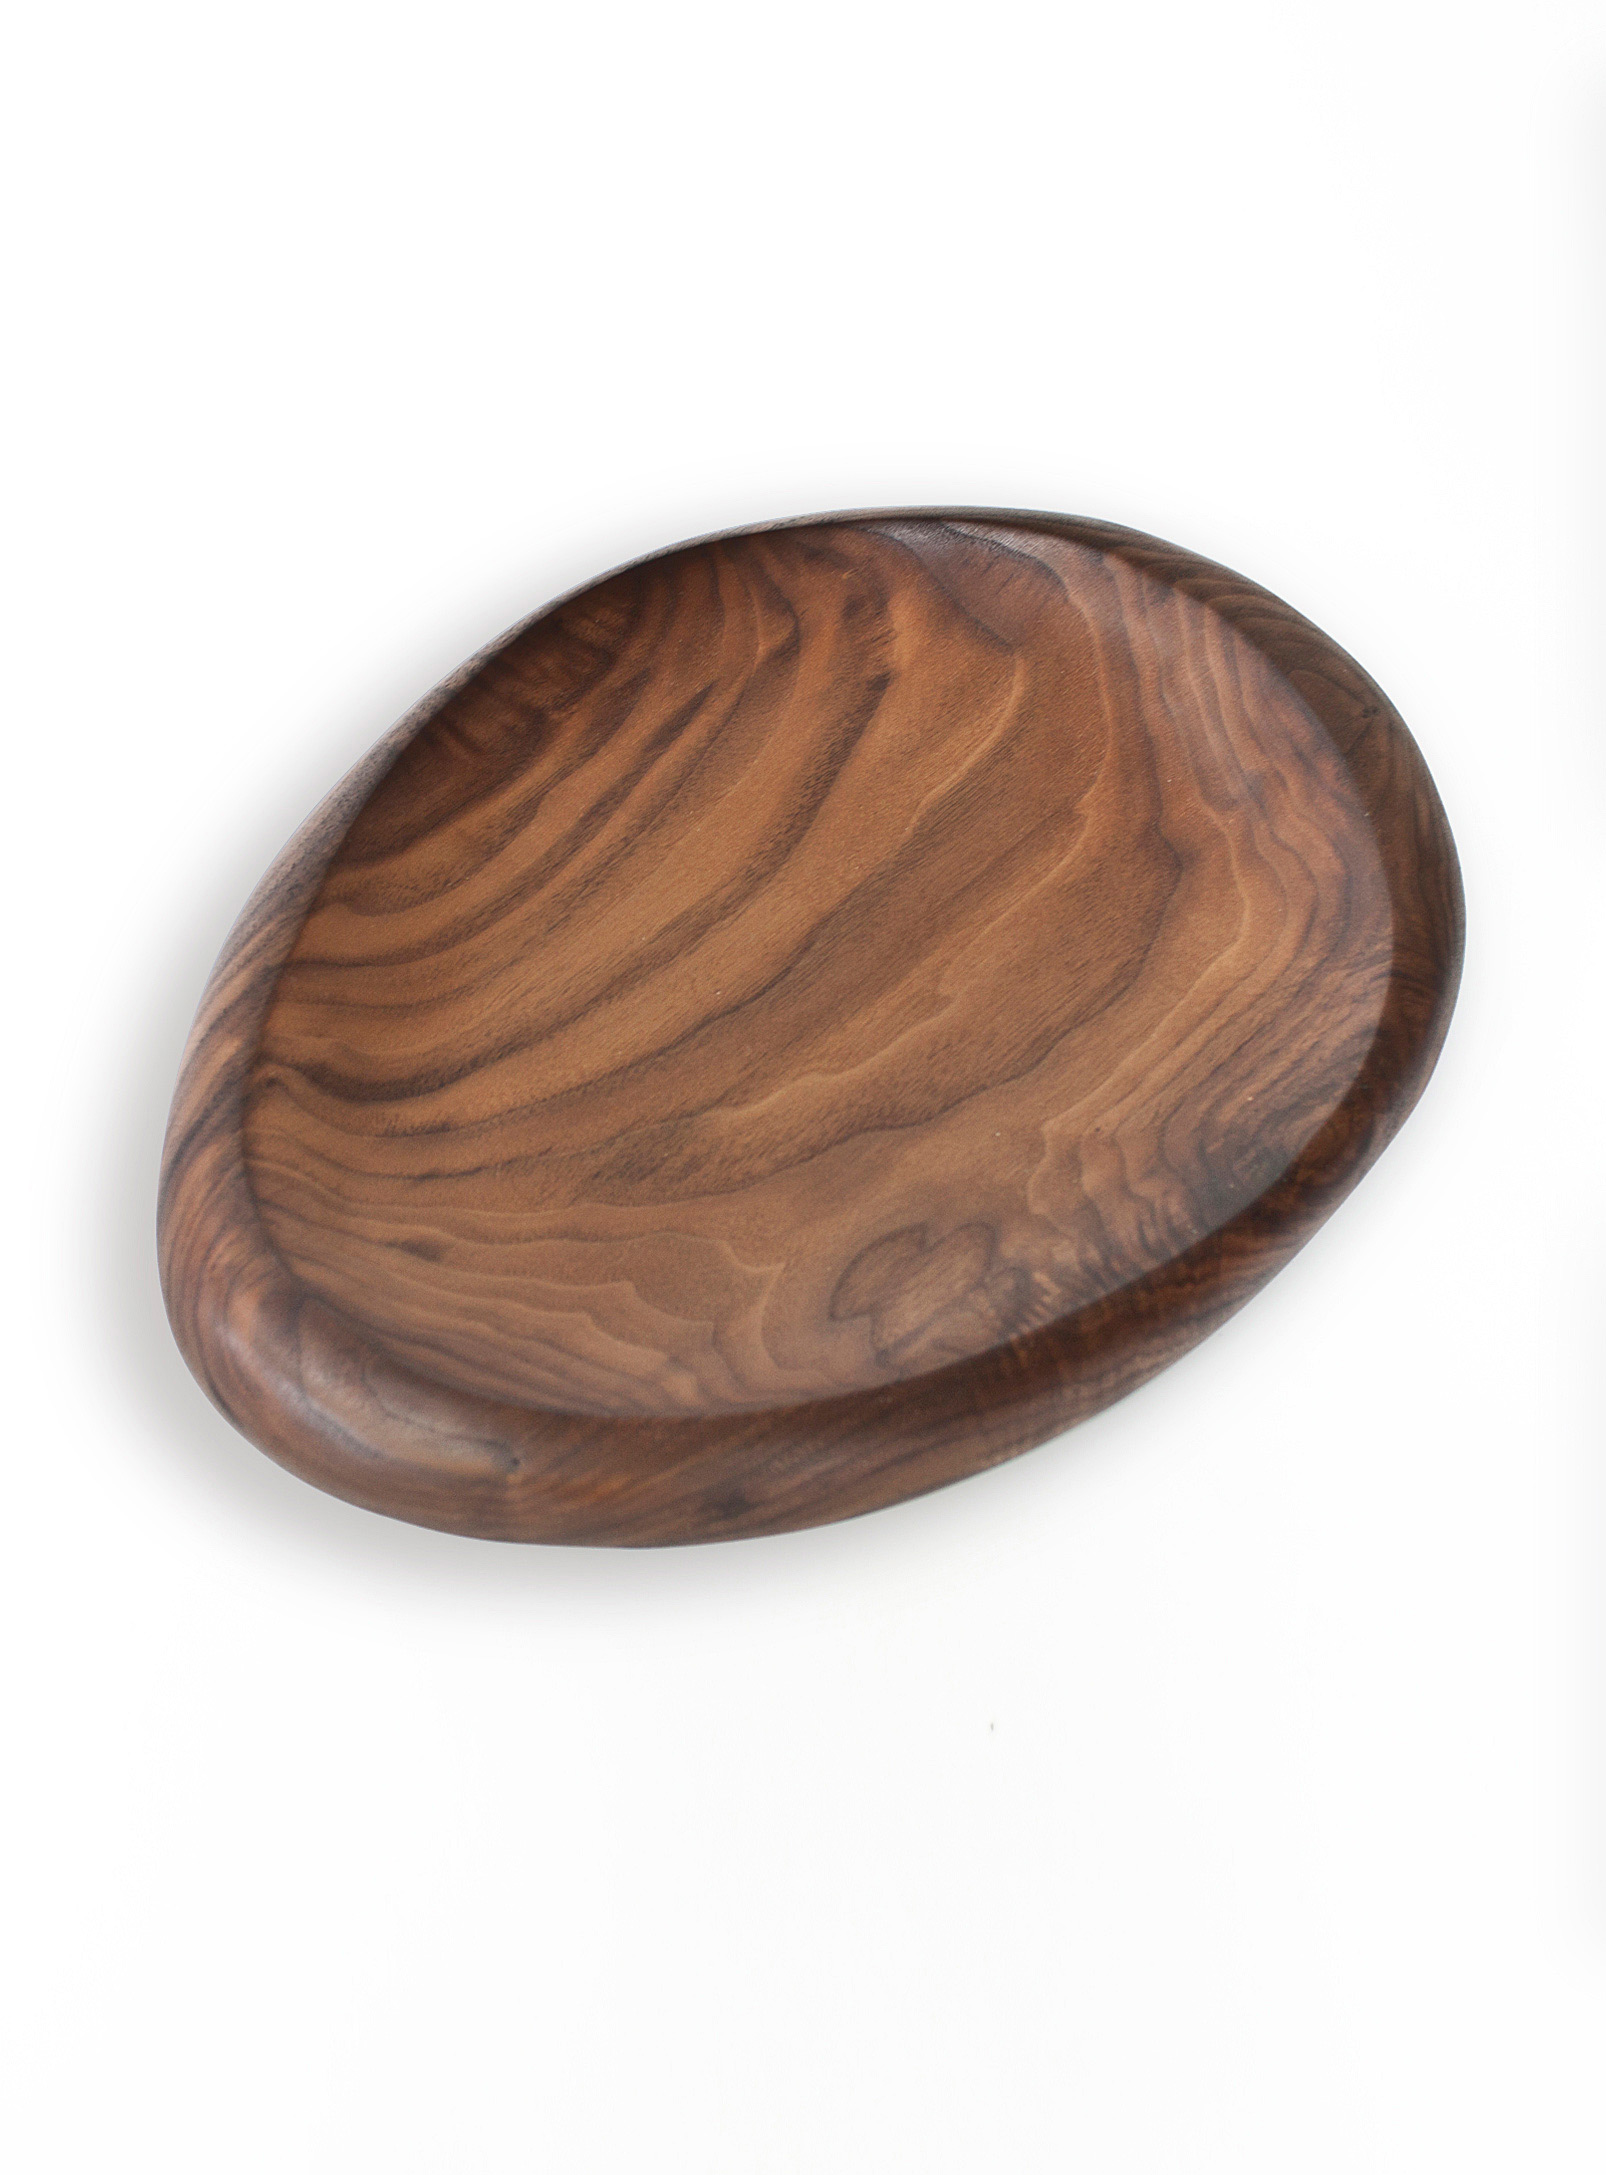 Nadine Hajjar Studio - Essay #3 sculpted walnut small tray